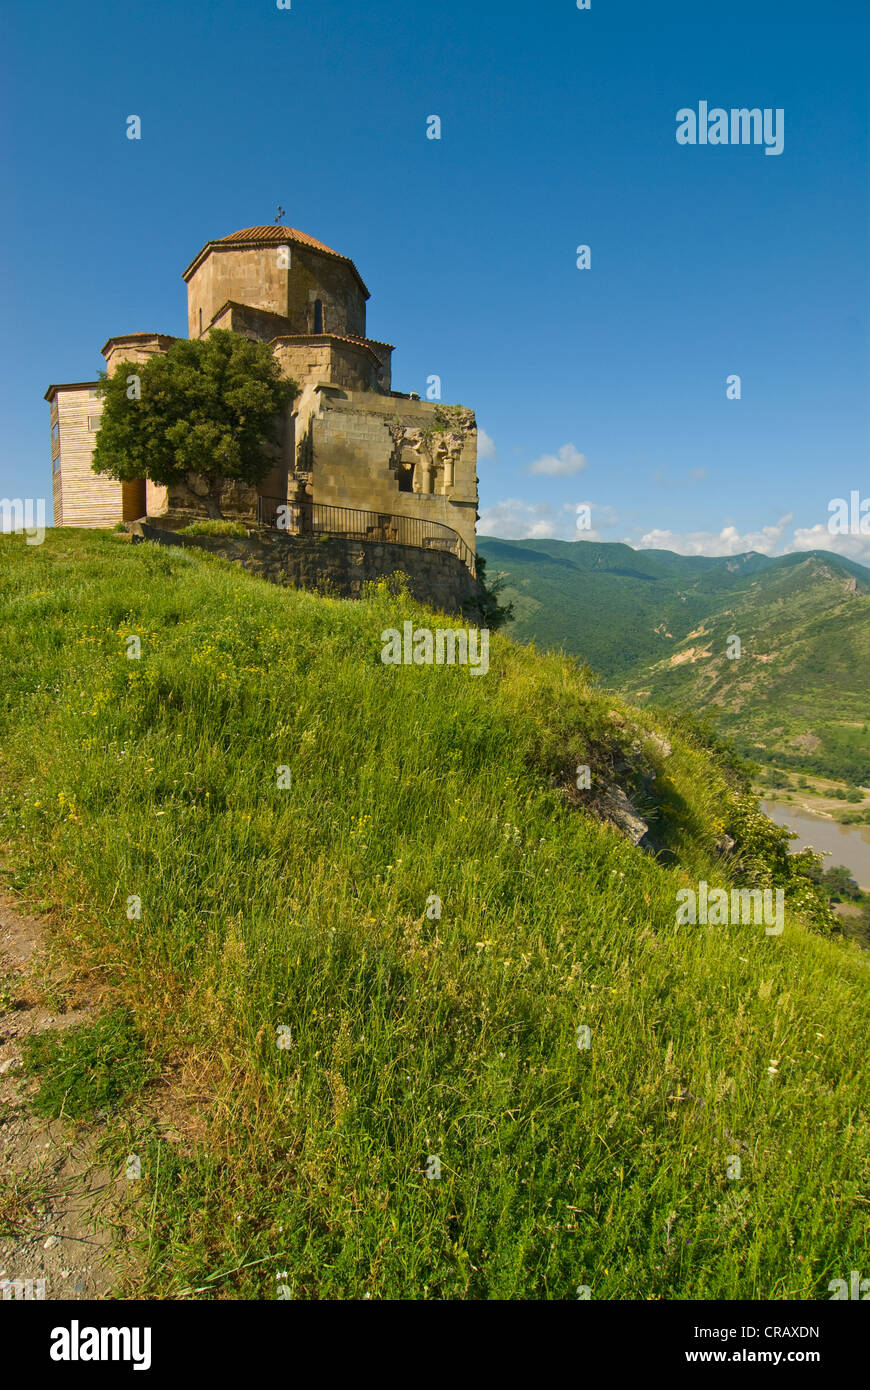 Church, Jvari Monastery located on a hill, Mtskheta, Georgia, Middle East Stock Photo